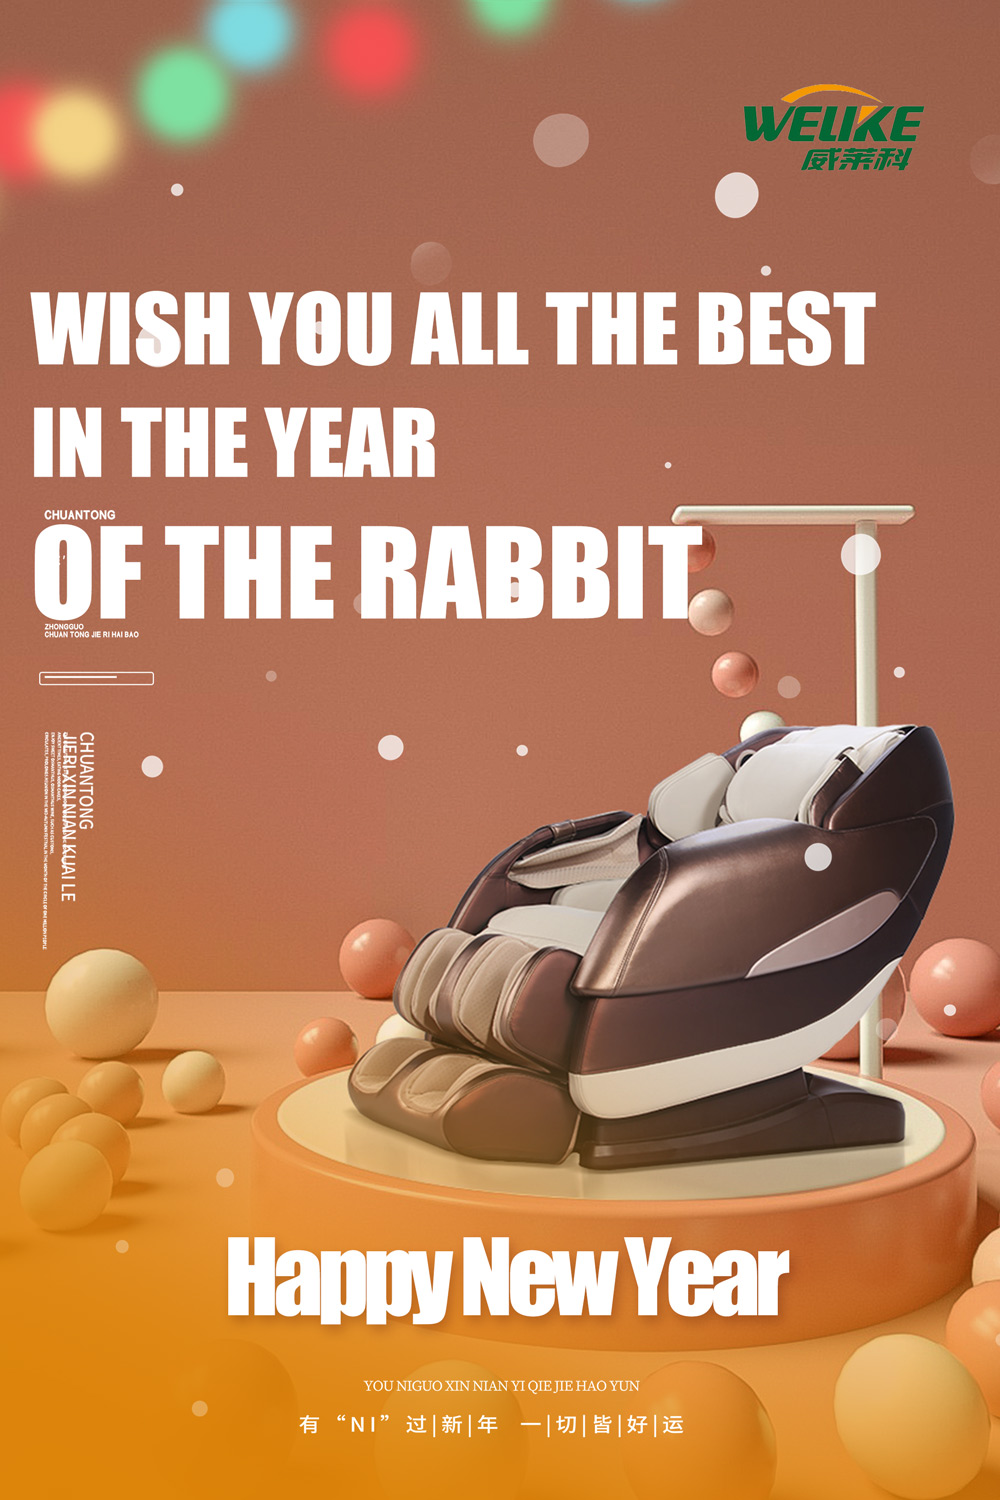 HAPPY NEW YEAR OF THE RABBIT